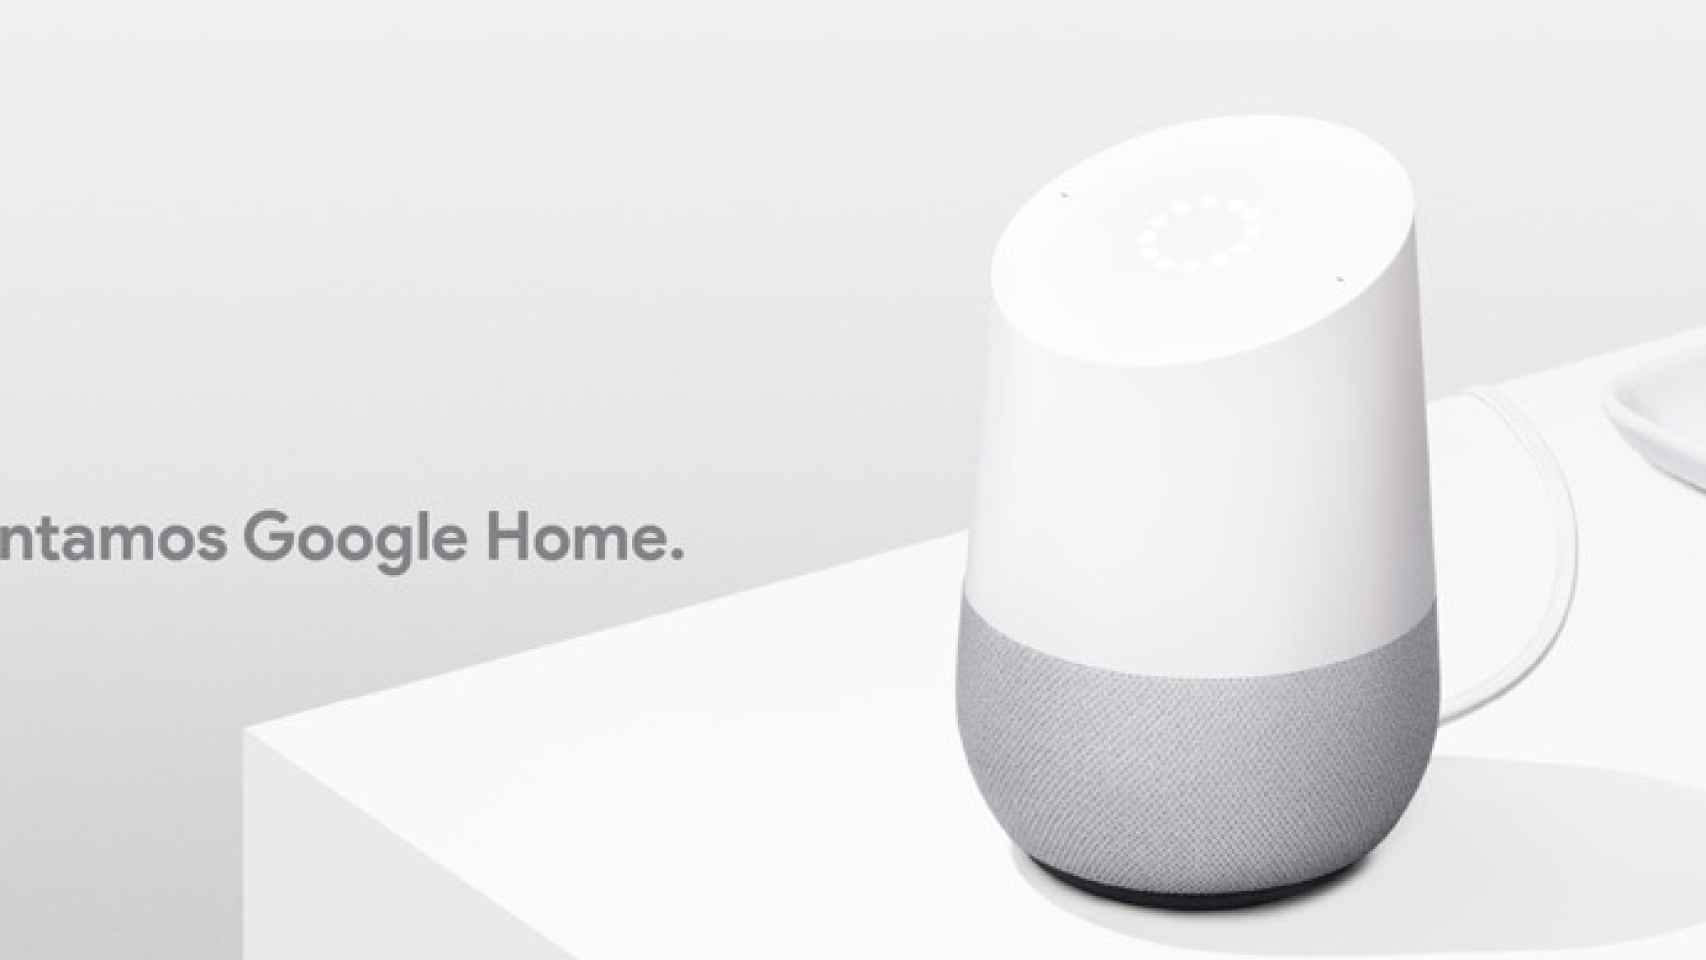 Altavoz inteligente  Asistente Google Home Mini, Smart Home